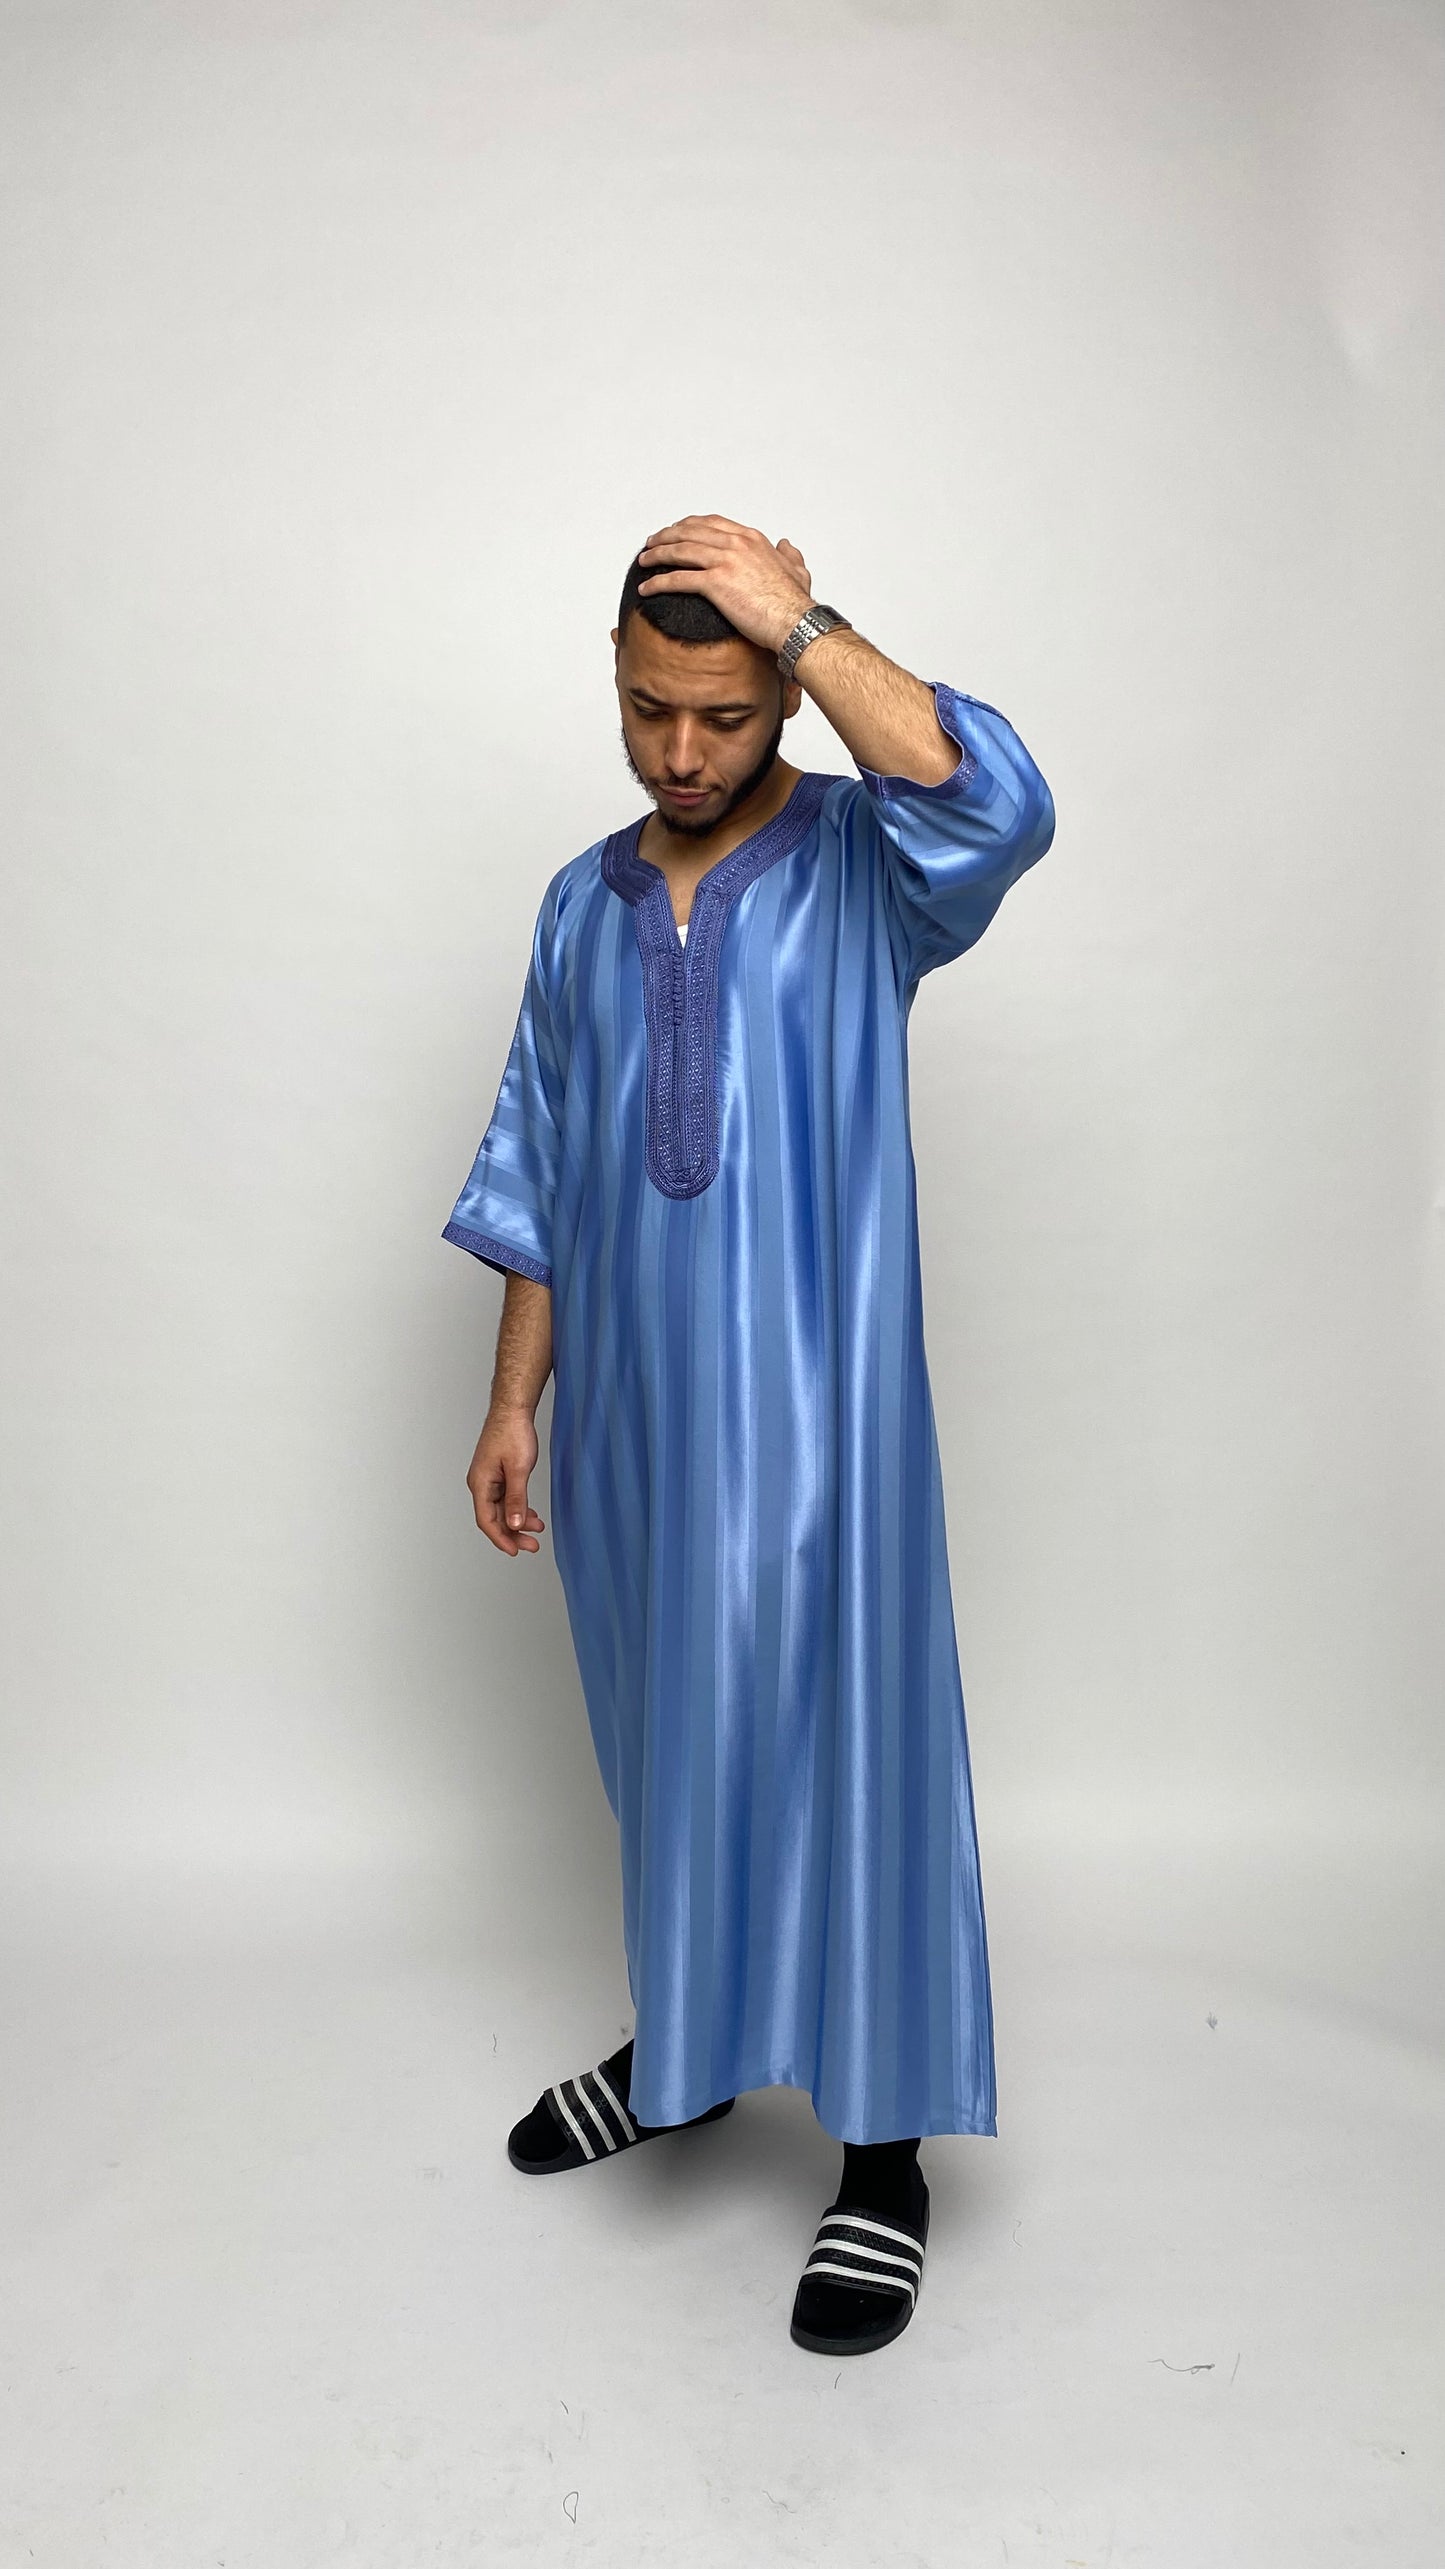 Cool Blue Satin Moroccan Thobe